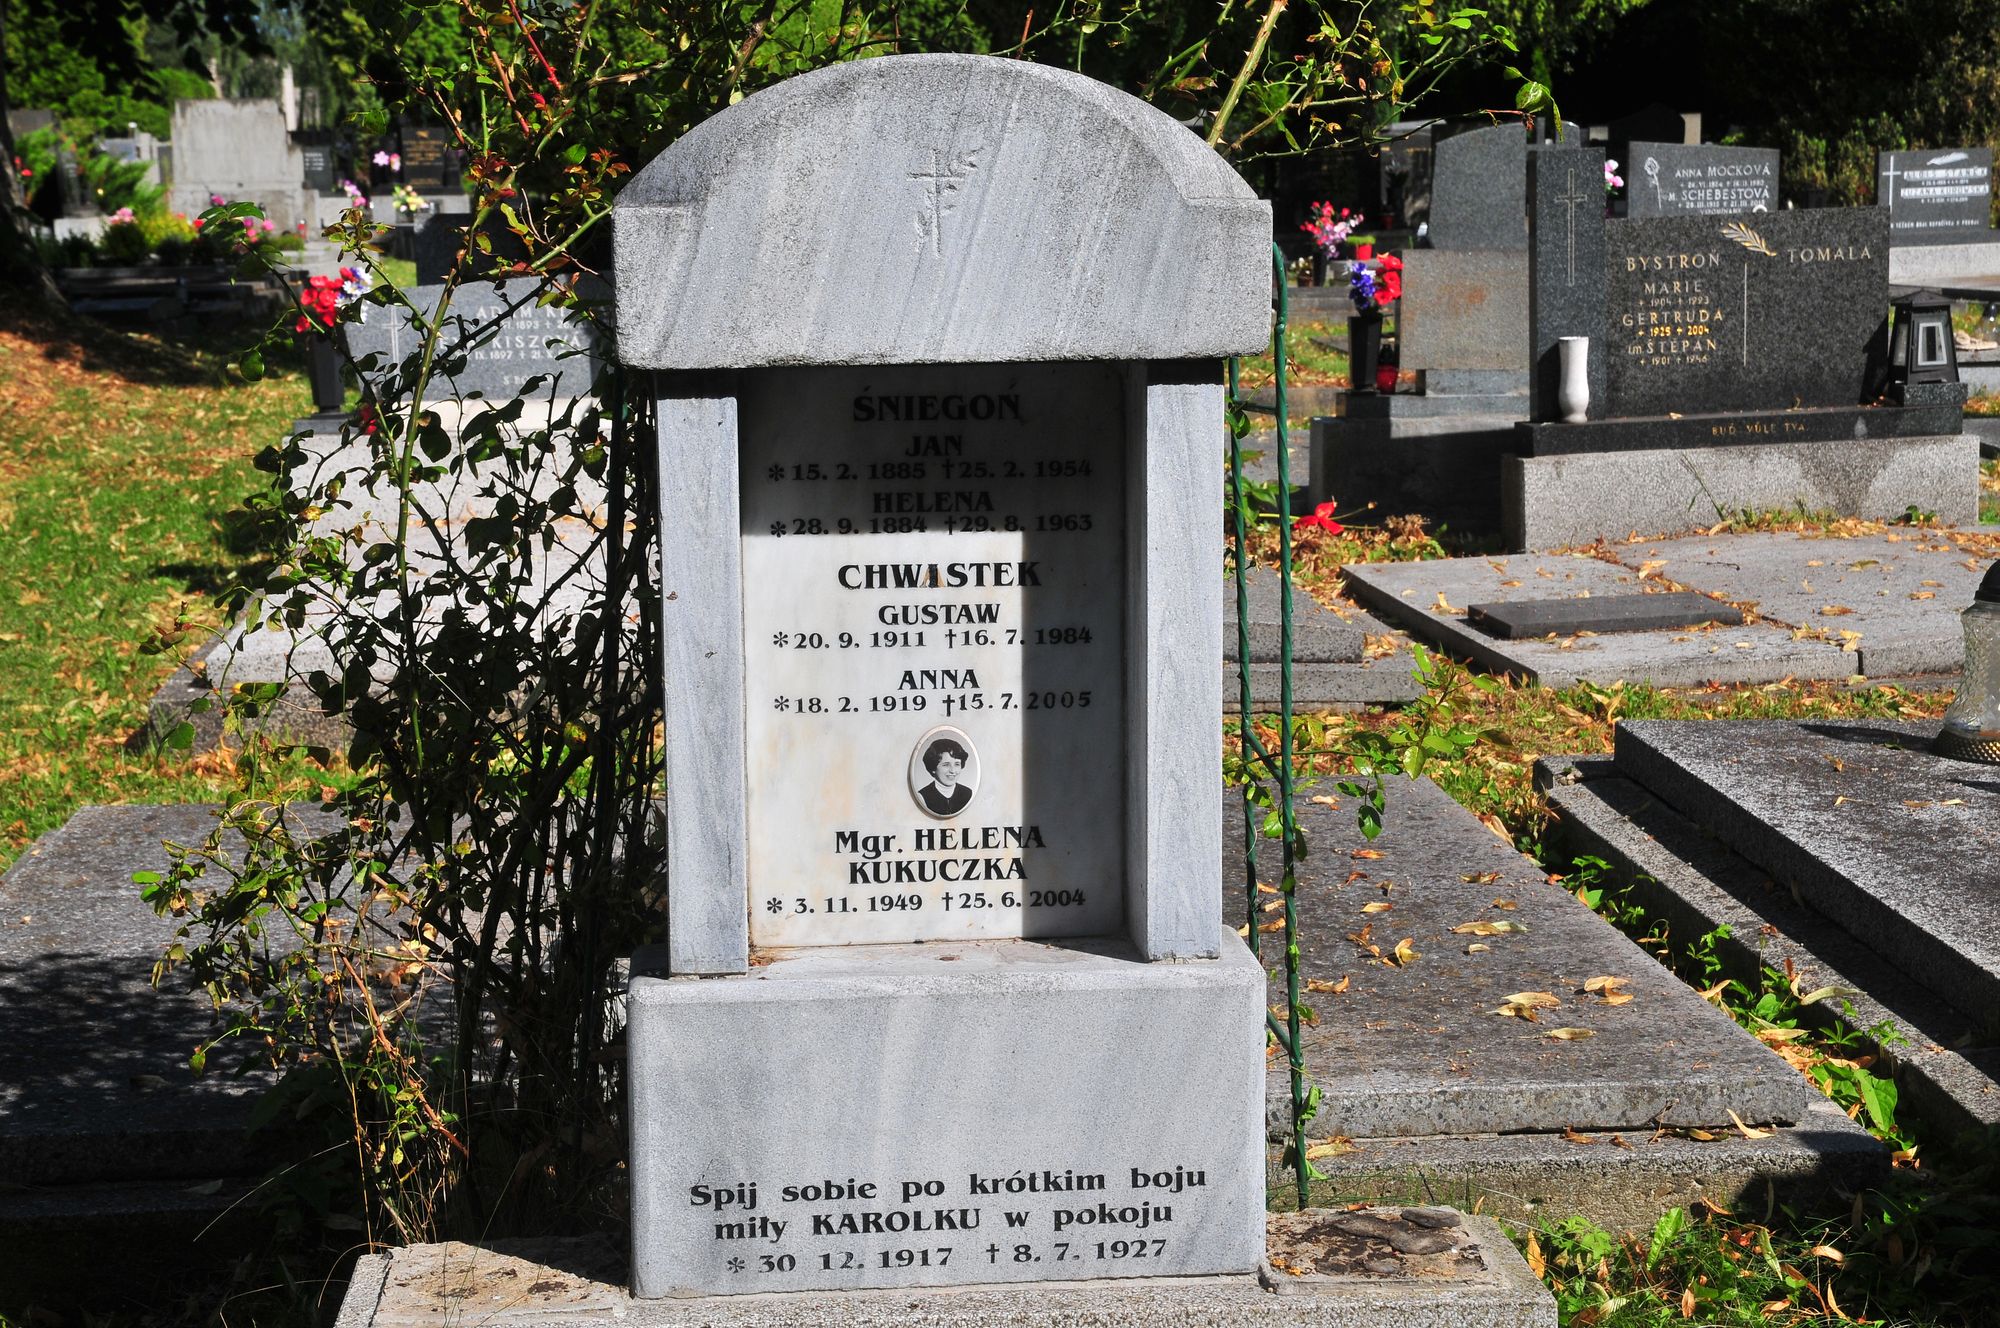 Tombstone of the families of Śniegoń, Chwistek, and Helena Kukuczka